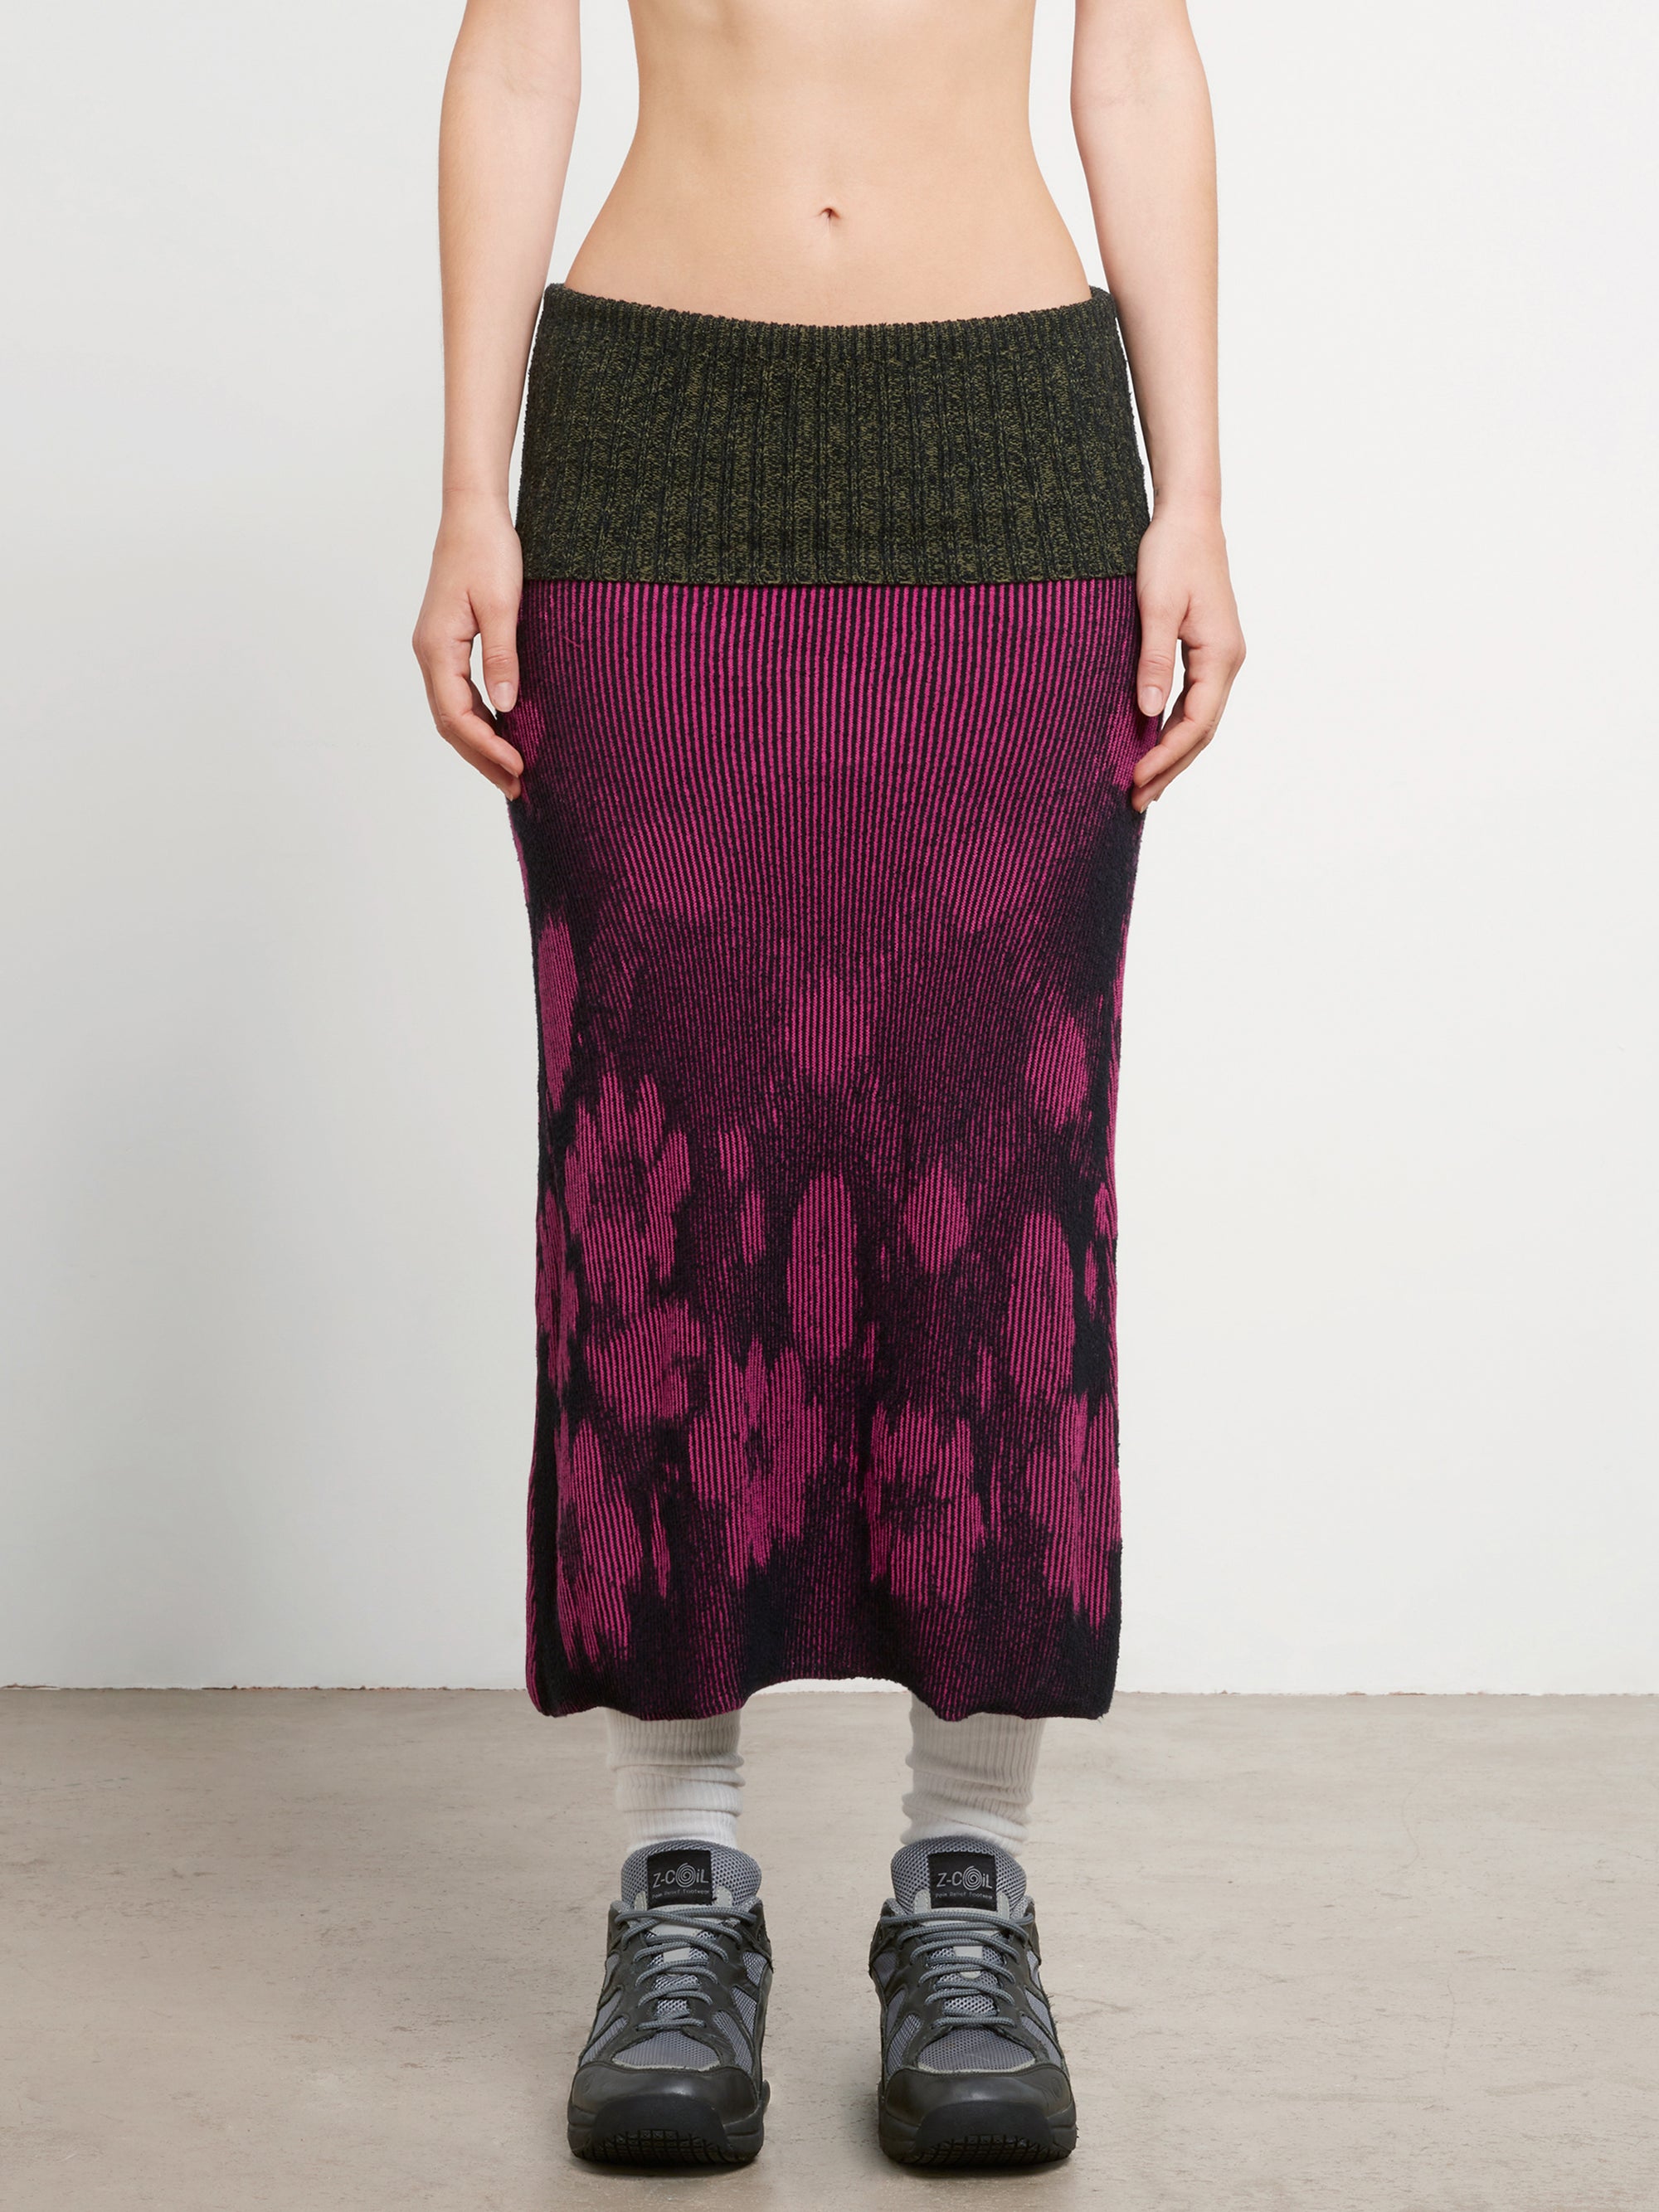 Paolina Russo - Women’s Illusion Knit Maxi Skirt - (Magenta/Black) view 2